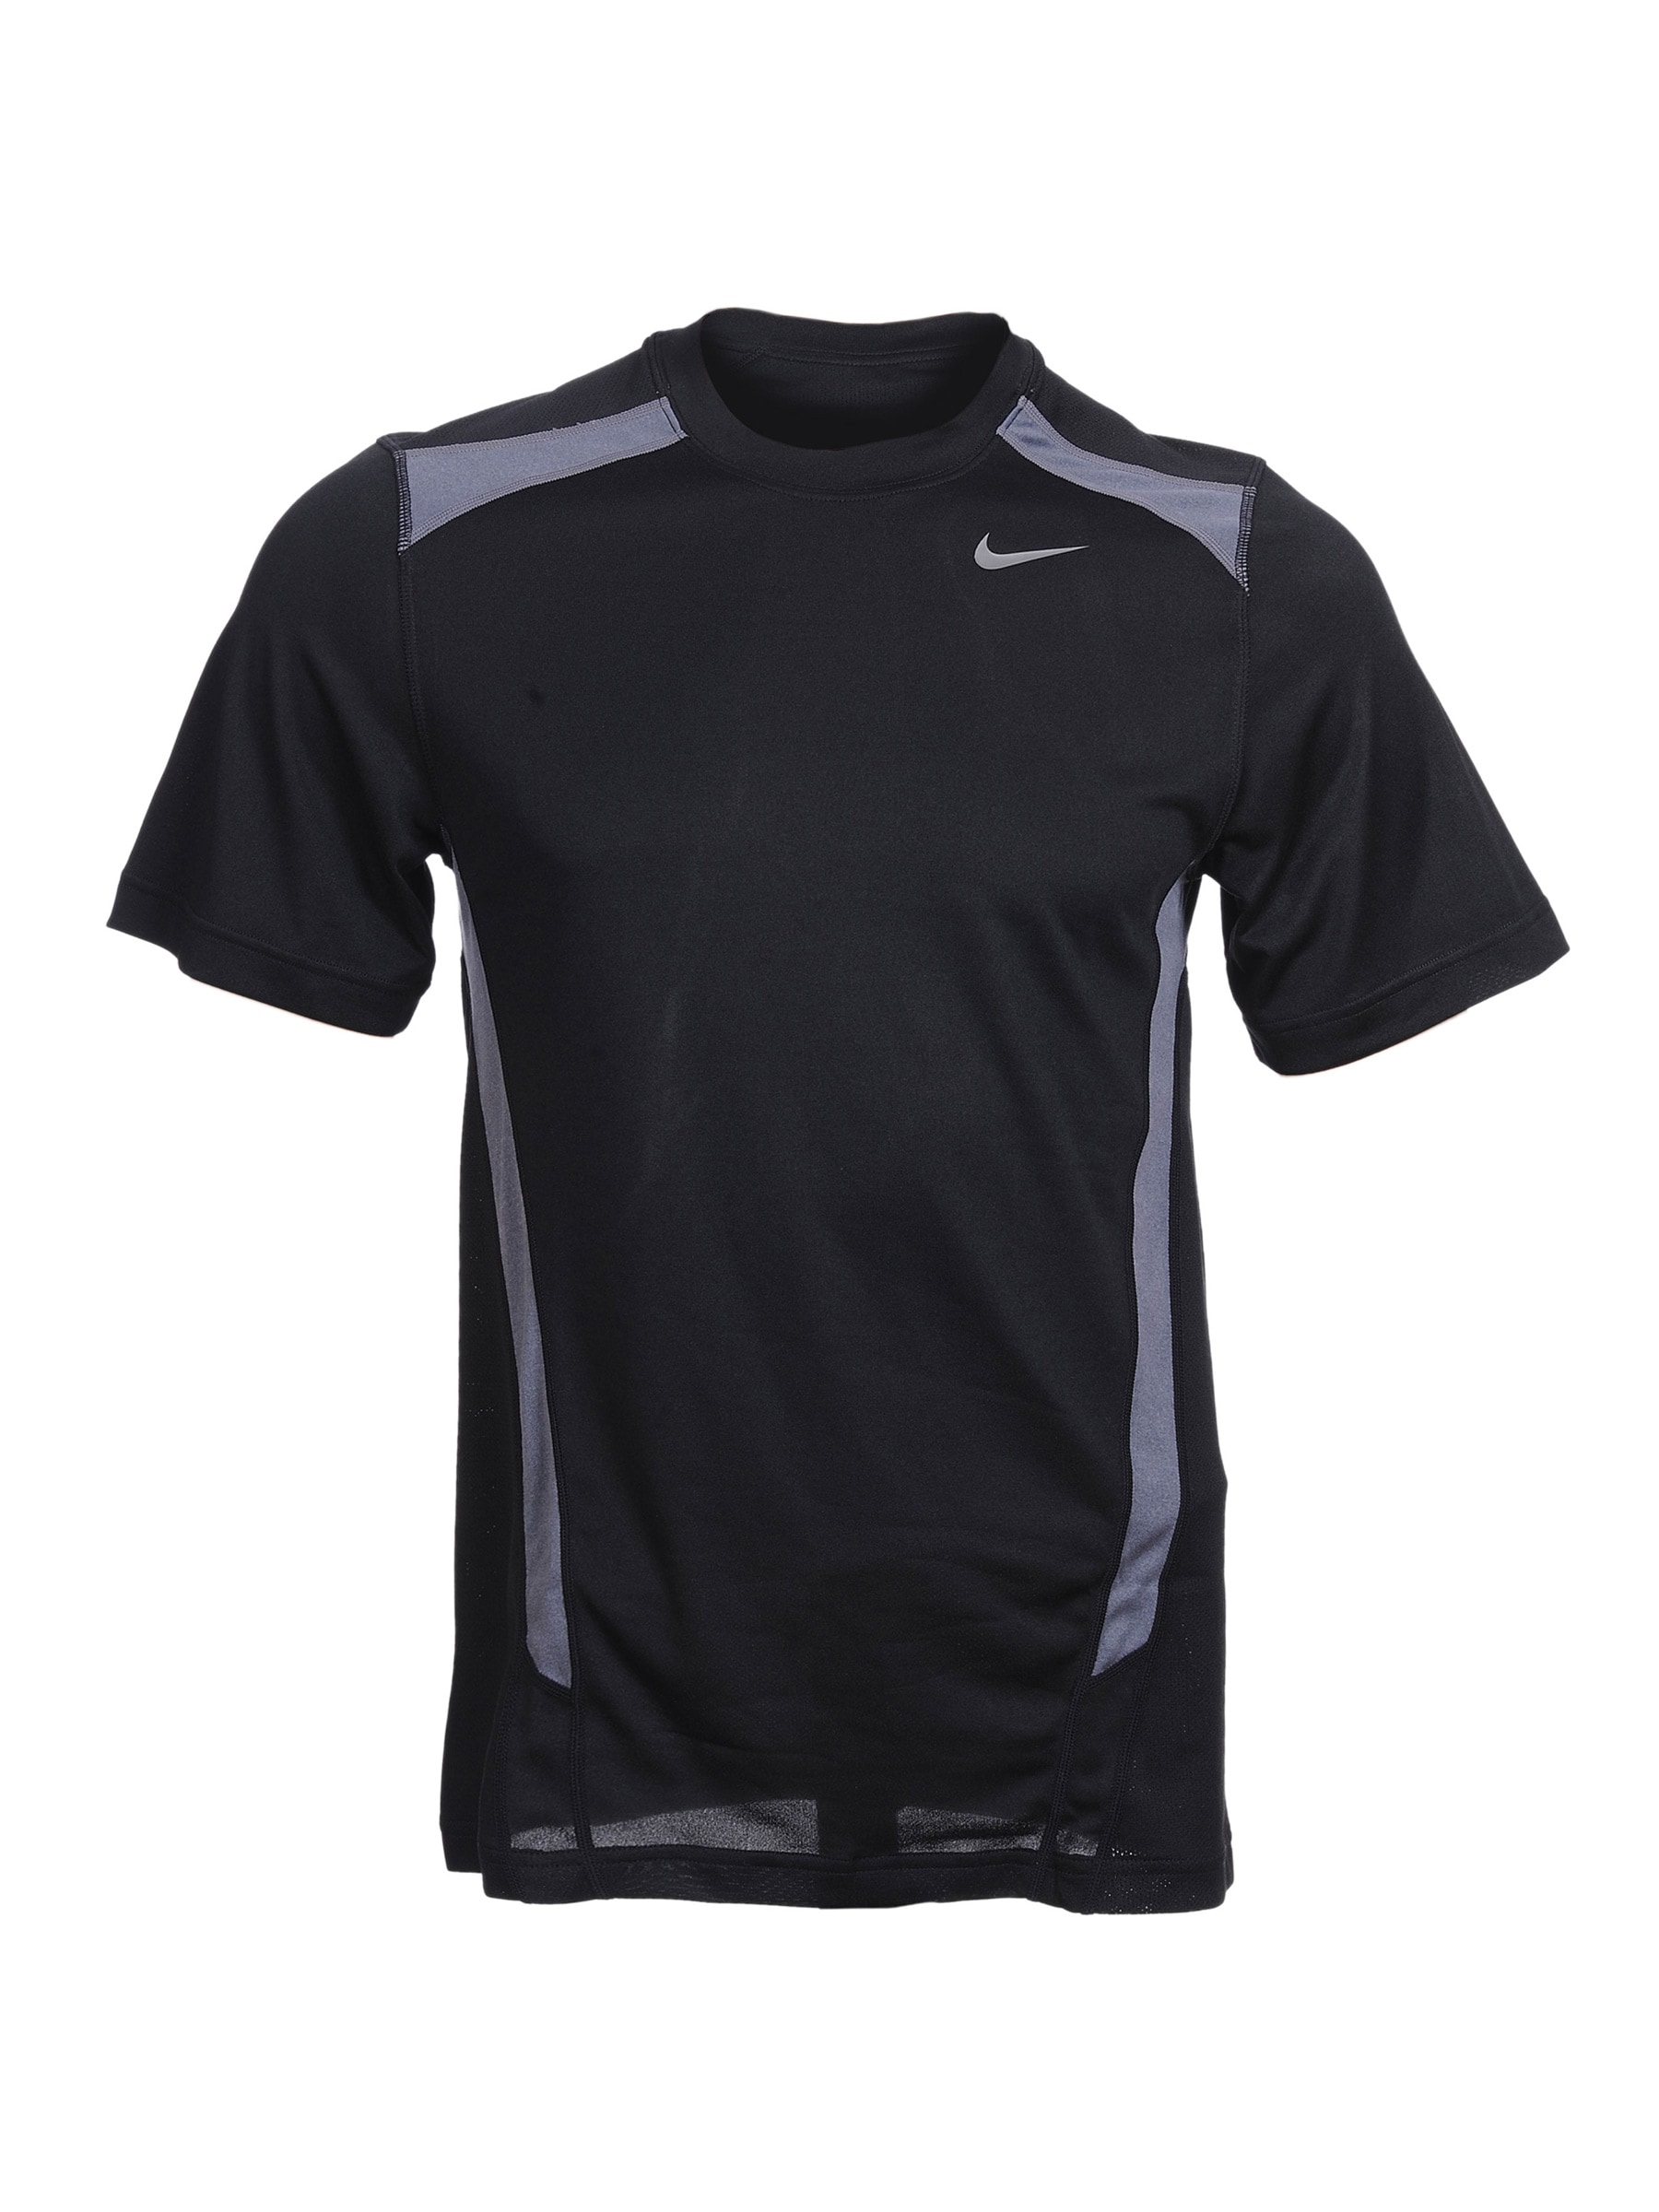 Nike Men's Classic Patterned T-shirt